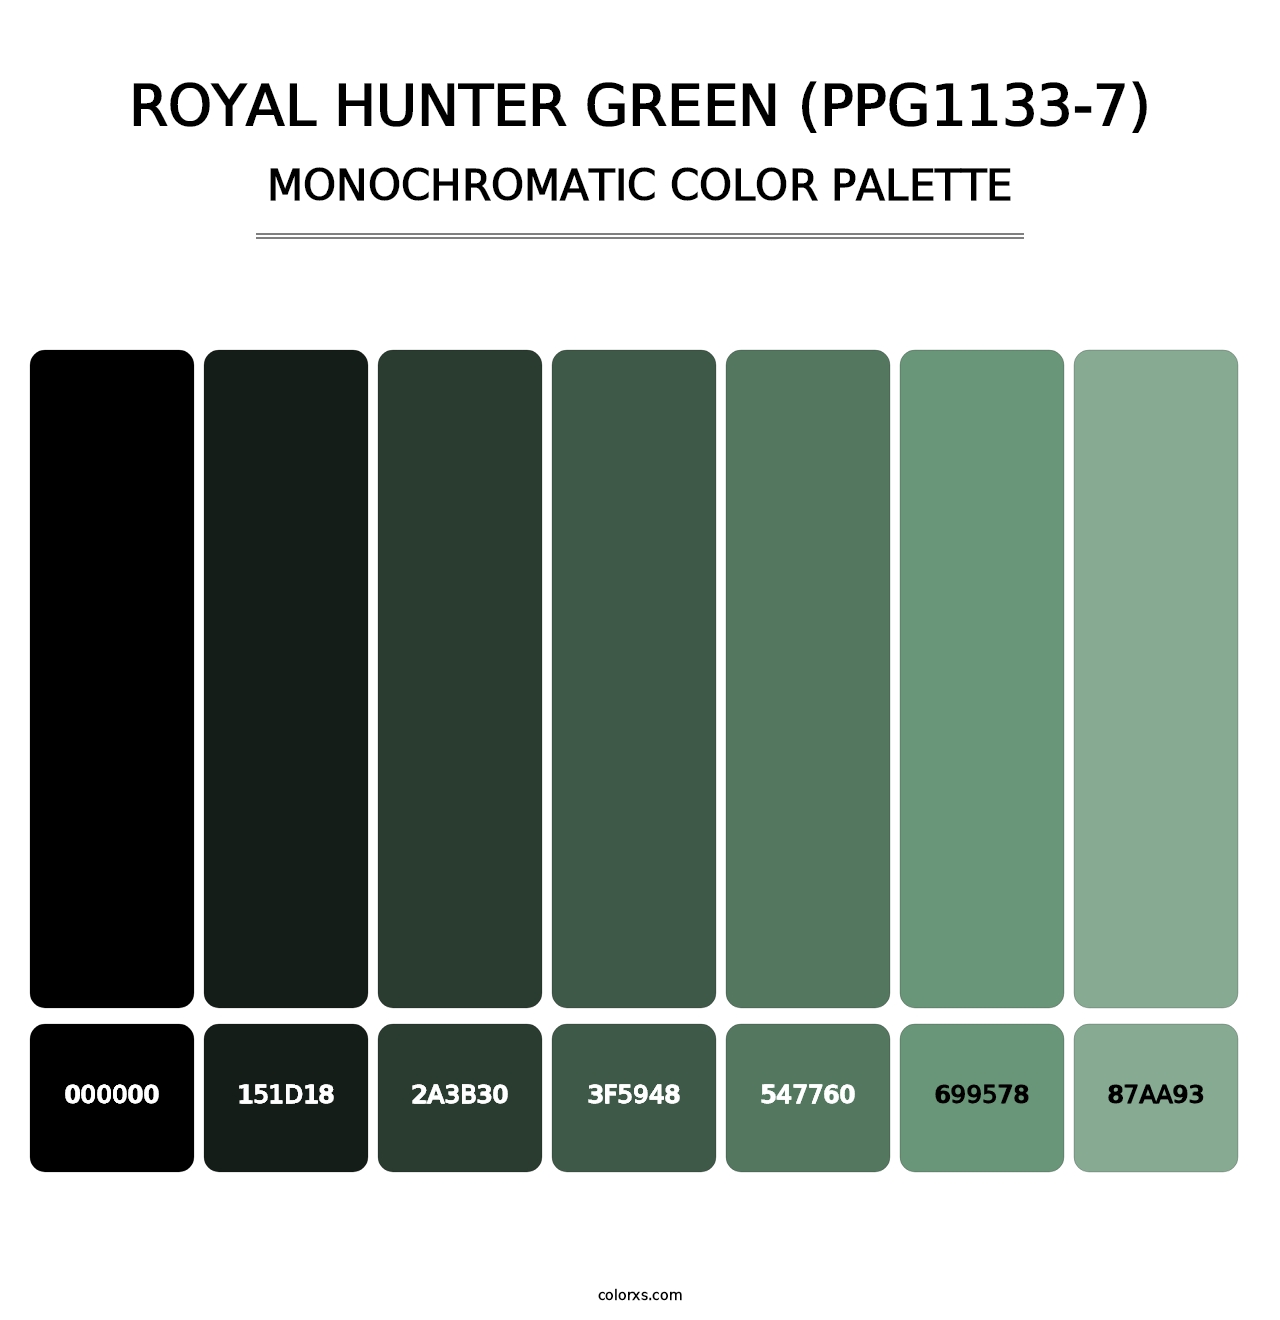 Royal Hunter Green (PPG1133-7) - Monochromatic Color Palette